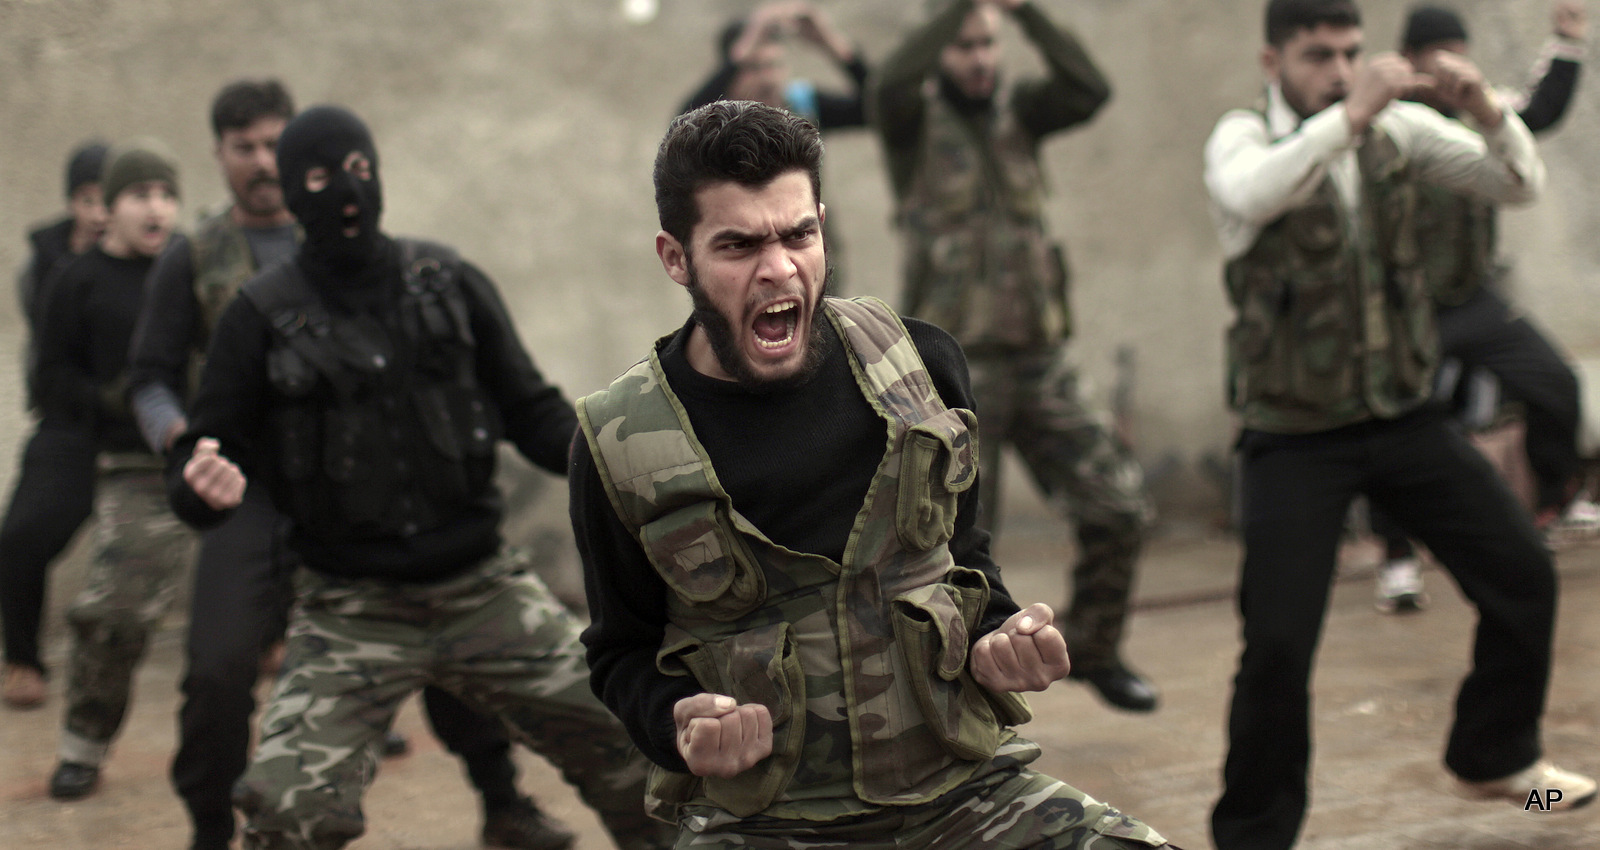 Syrian rebels attend a training session in Maaret Ikhwan near Idlib, Syria